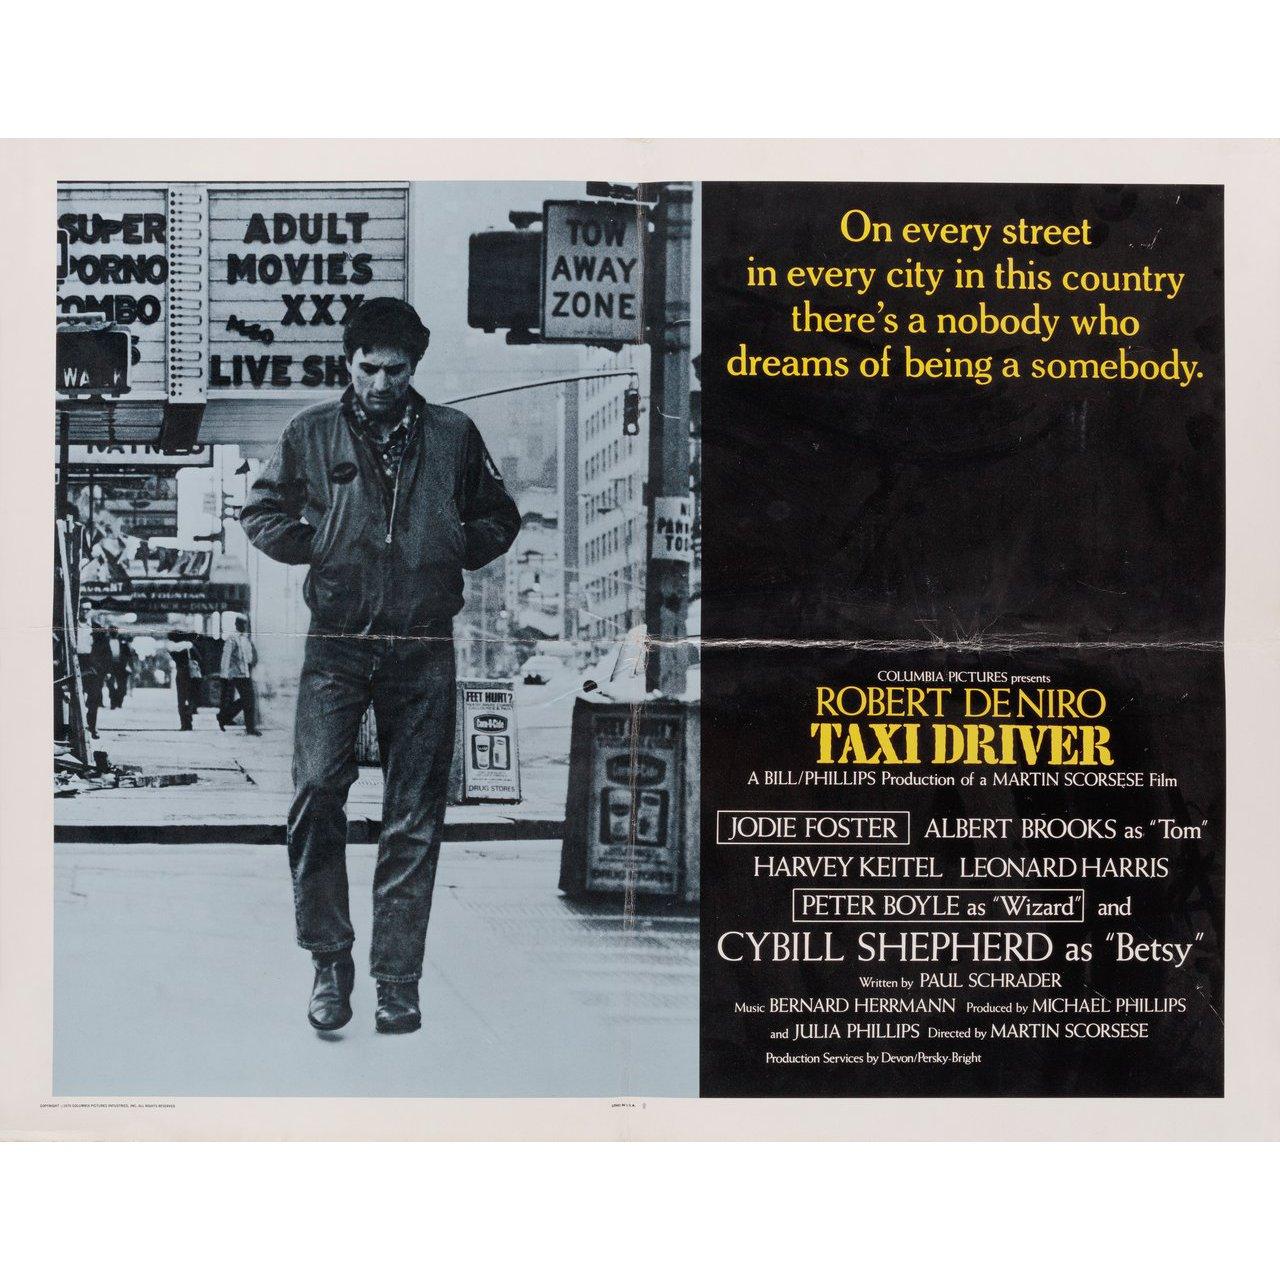 Original 1976 U.S. half sheet poster for the film Taxi Driver directed by Martin Scorsese with Robert De Niro / Jodie Foster / Cybill Shepherd / Harvey Keitel / Diahnne Abbott / Frank Adu / Victor Argo / Gino Ardito. Very Good-Fine condition,